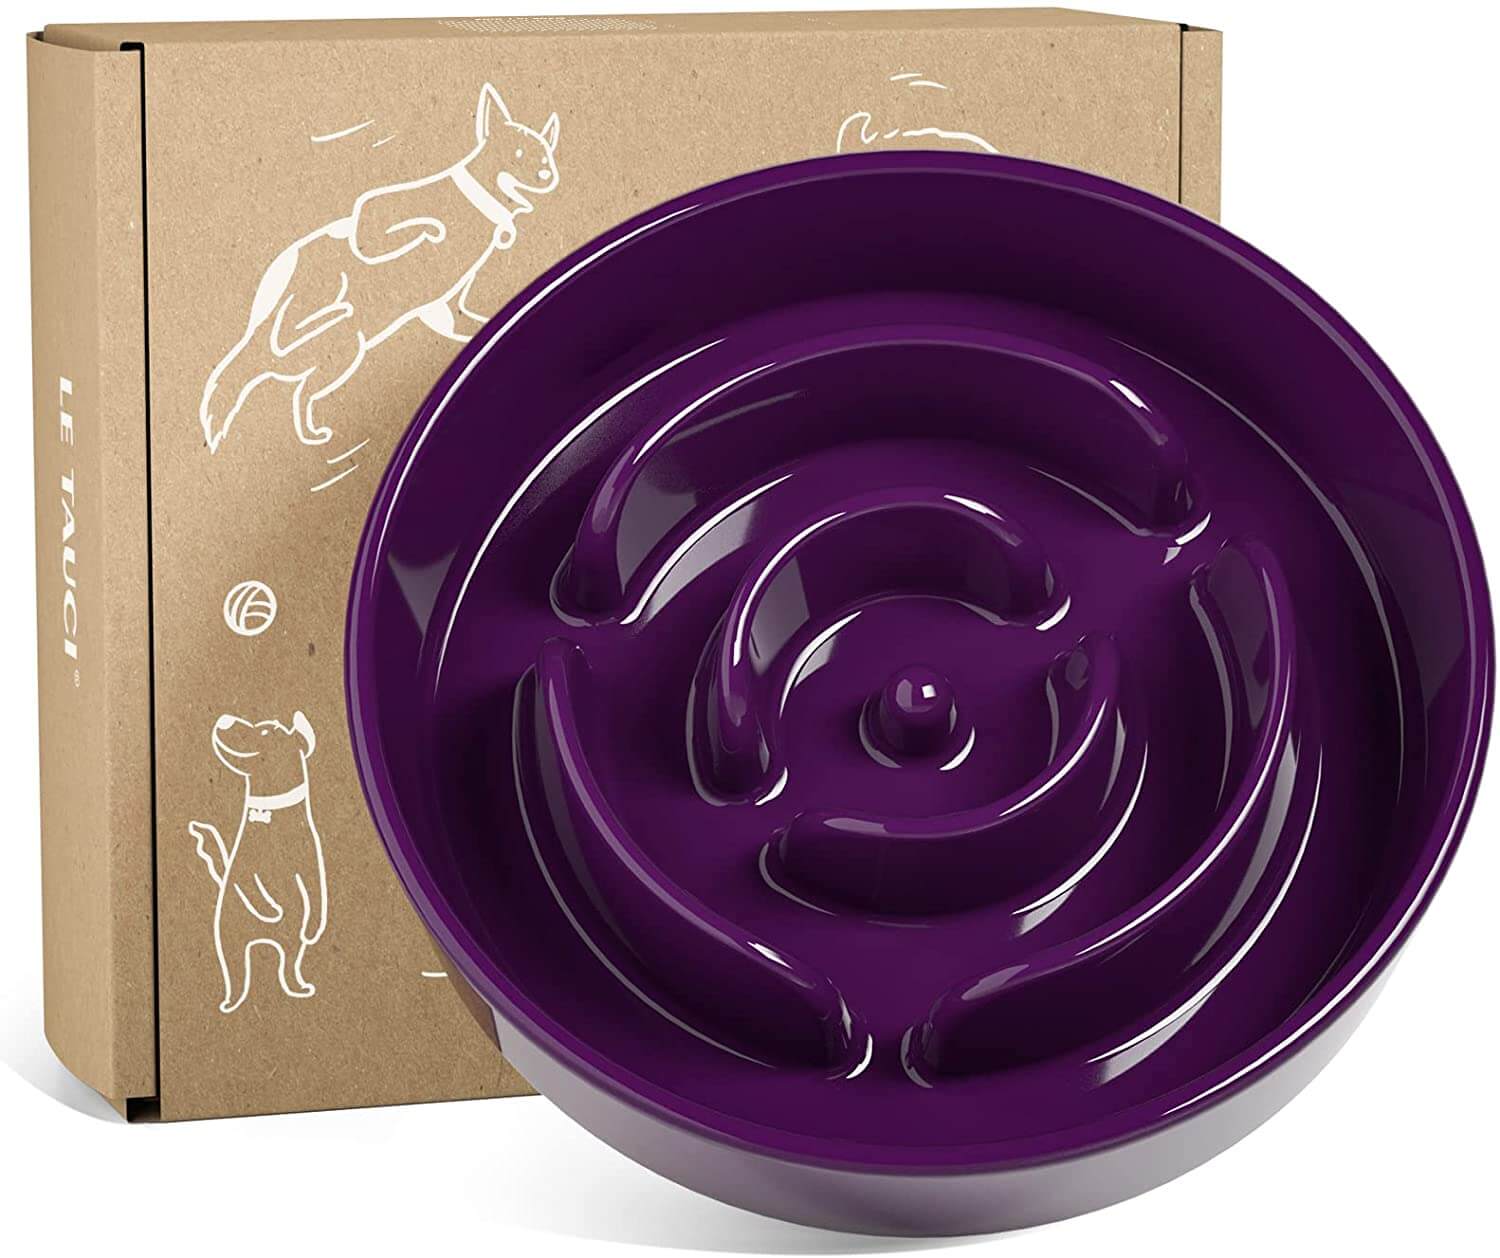 LE TAUCI Ceramic Slow Feeder Dog Bowl